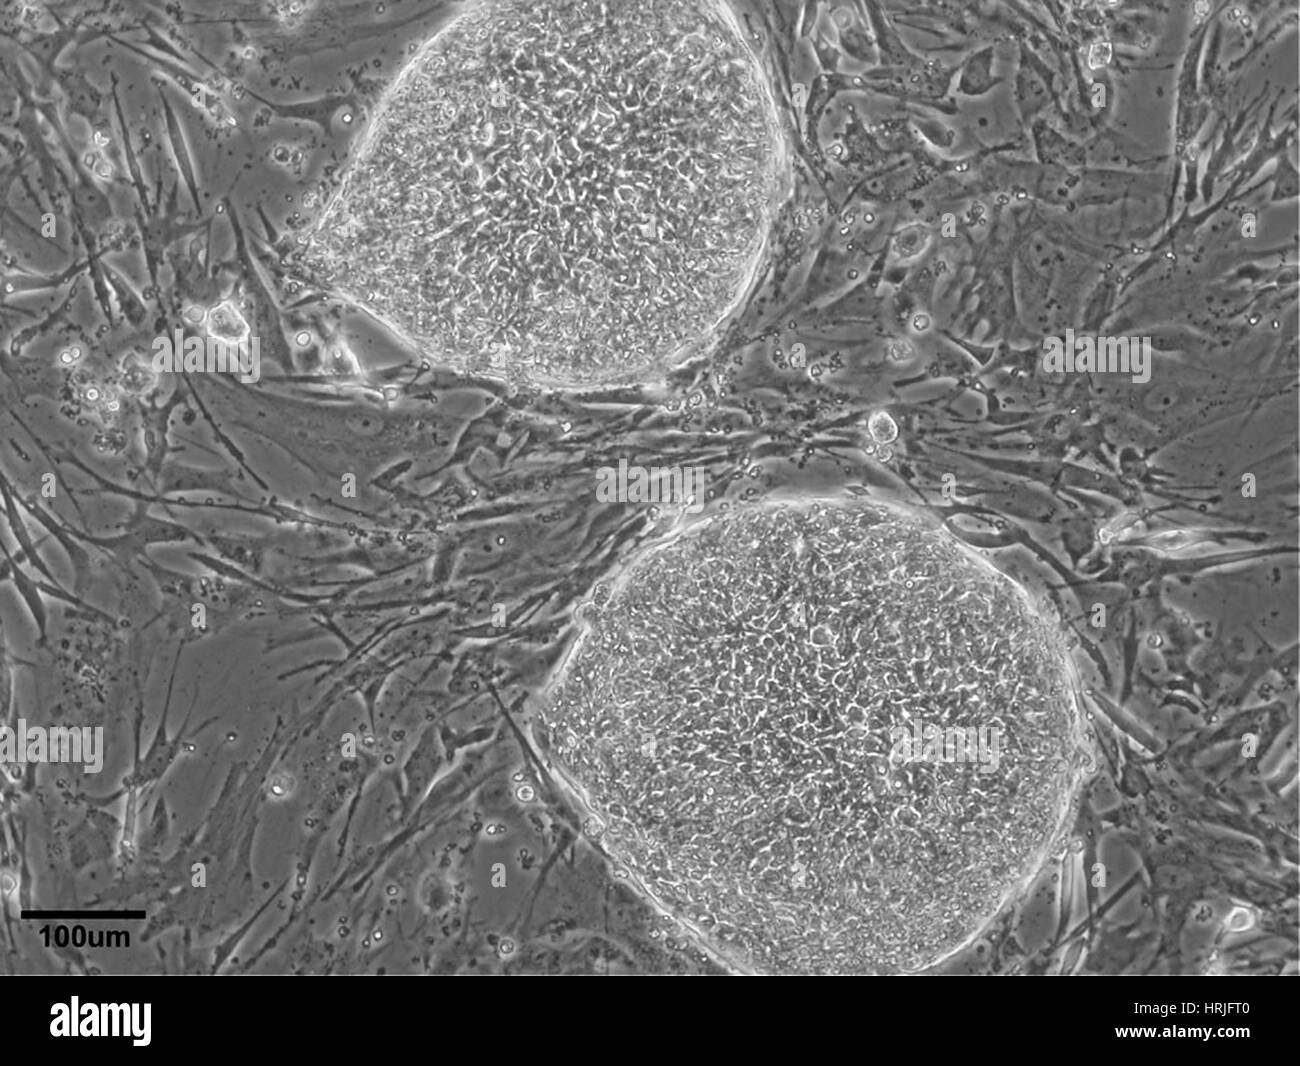 Human Embryonic Stem Cell Line WA07 Stock Photo